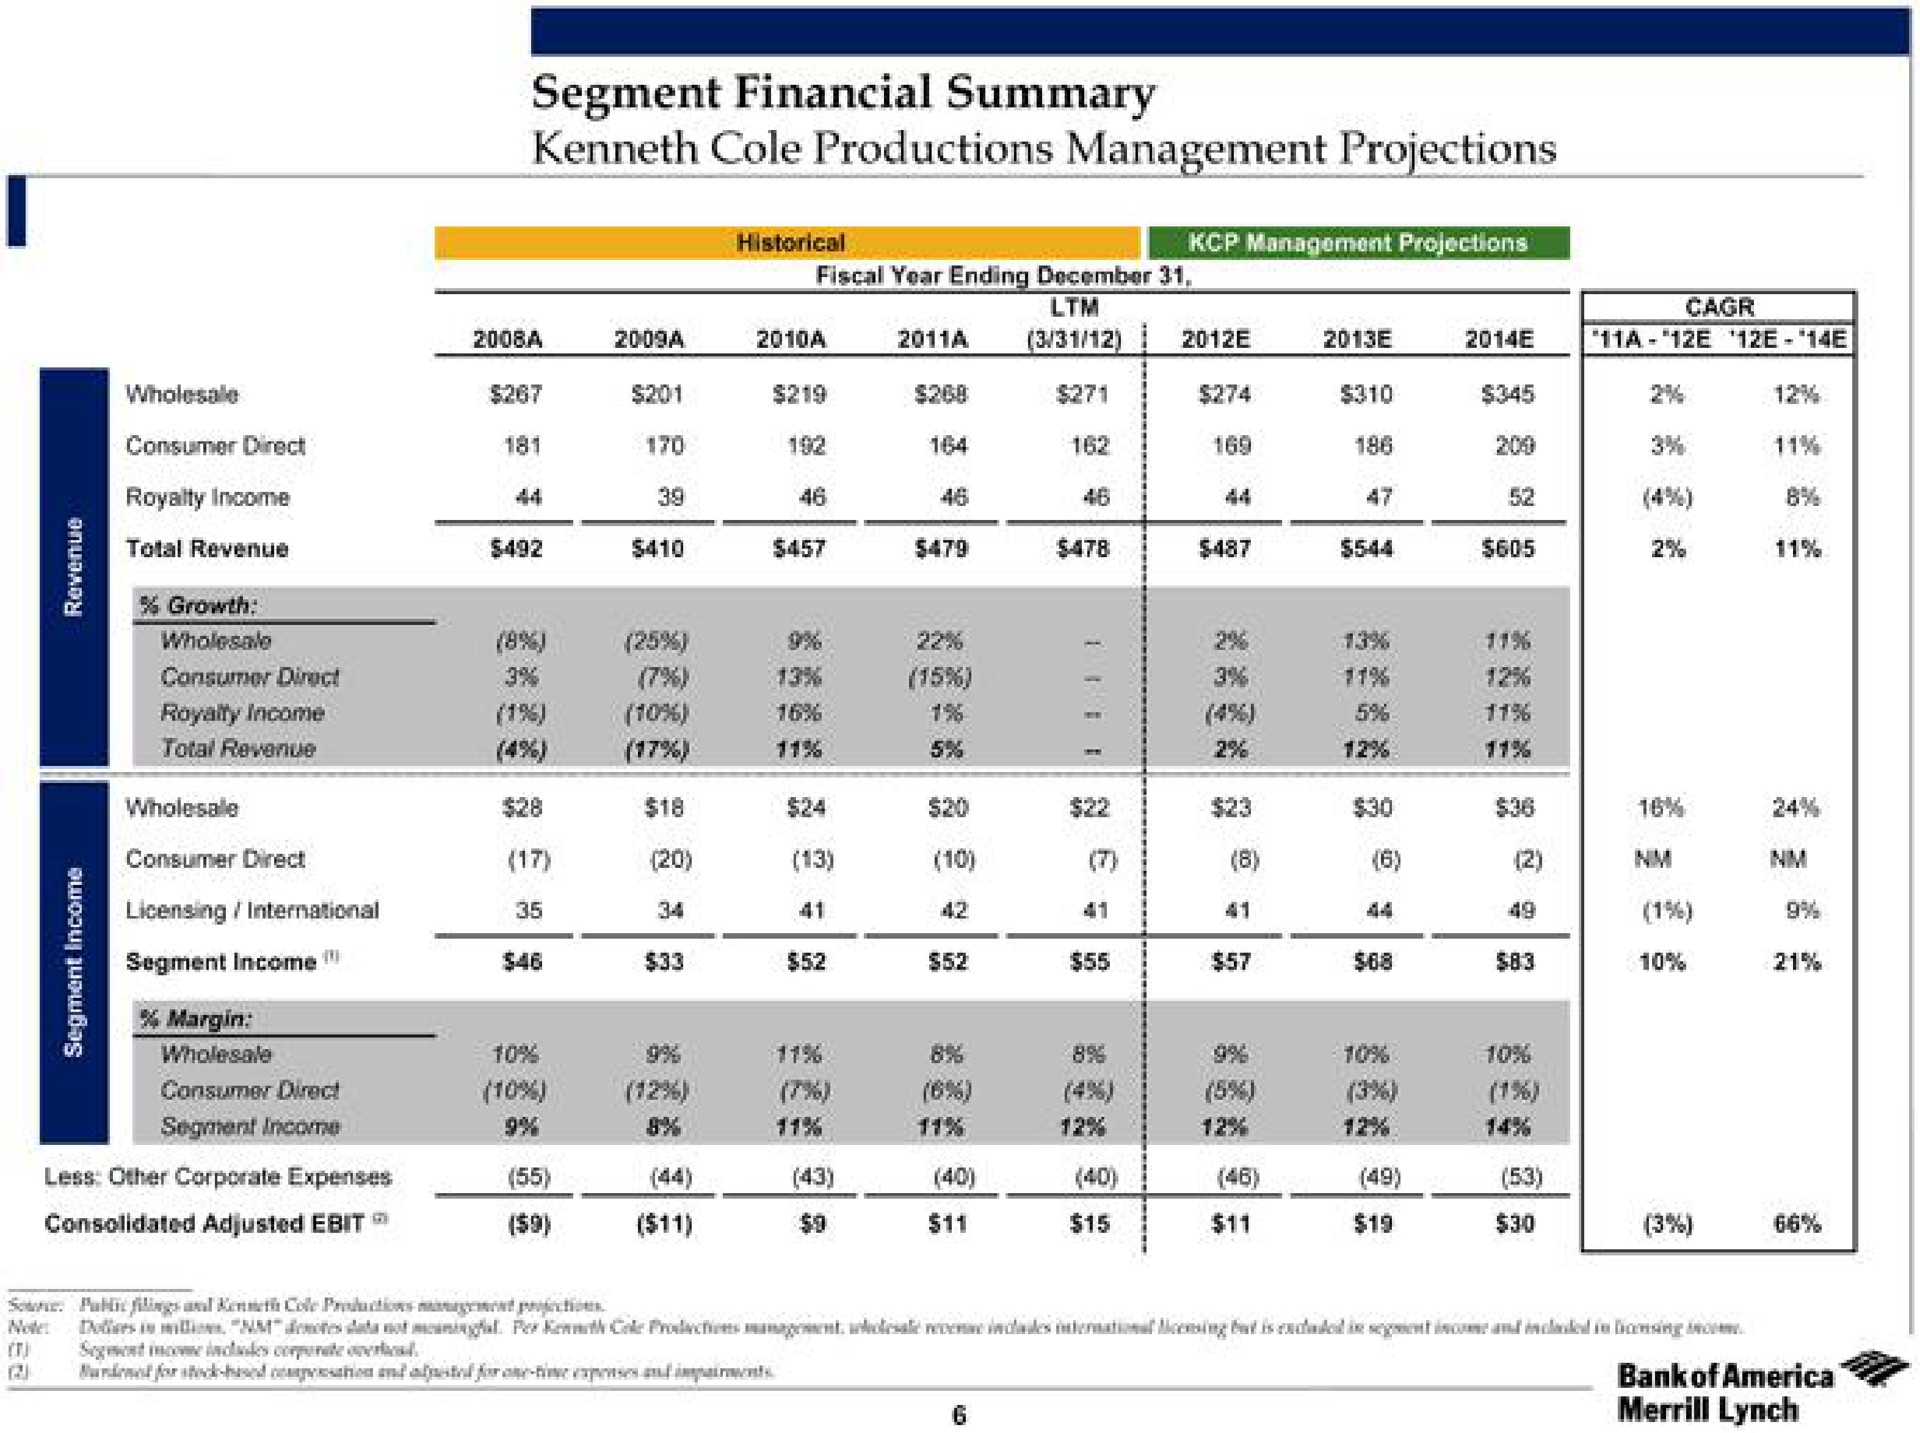 segment financial summary margin | Bank of America